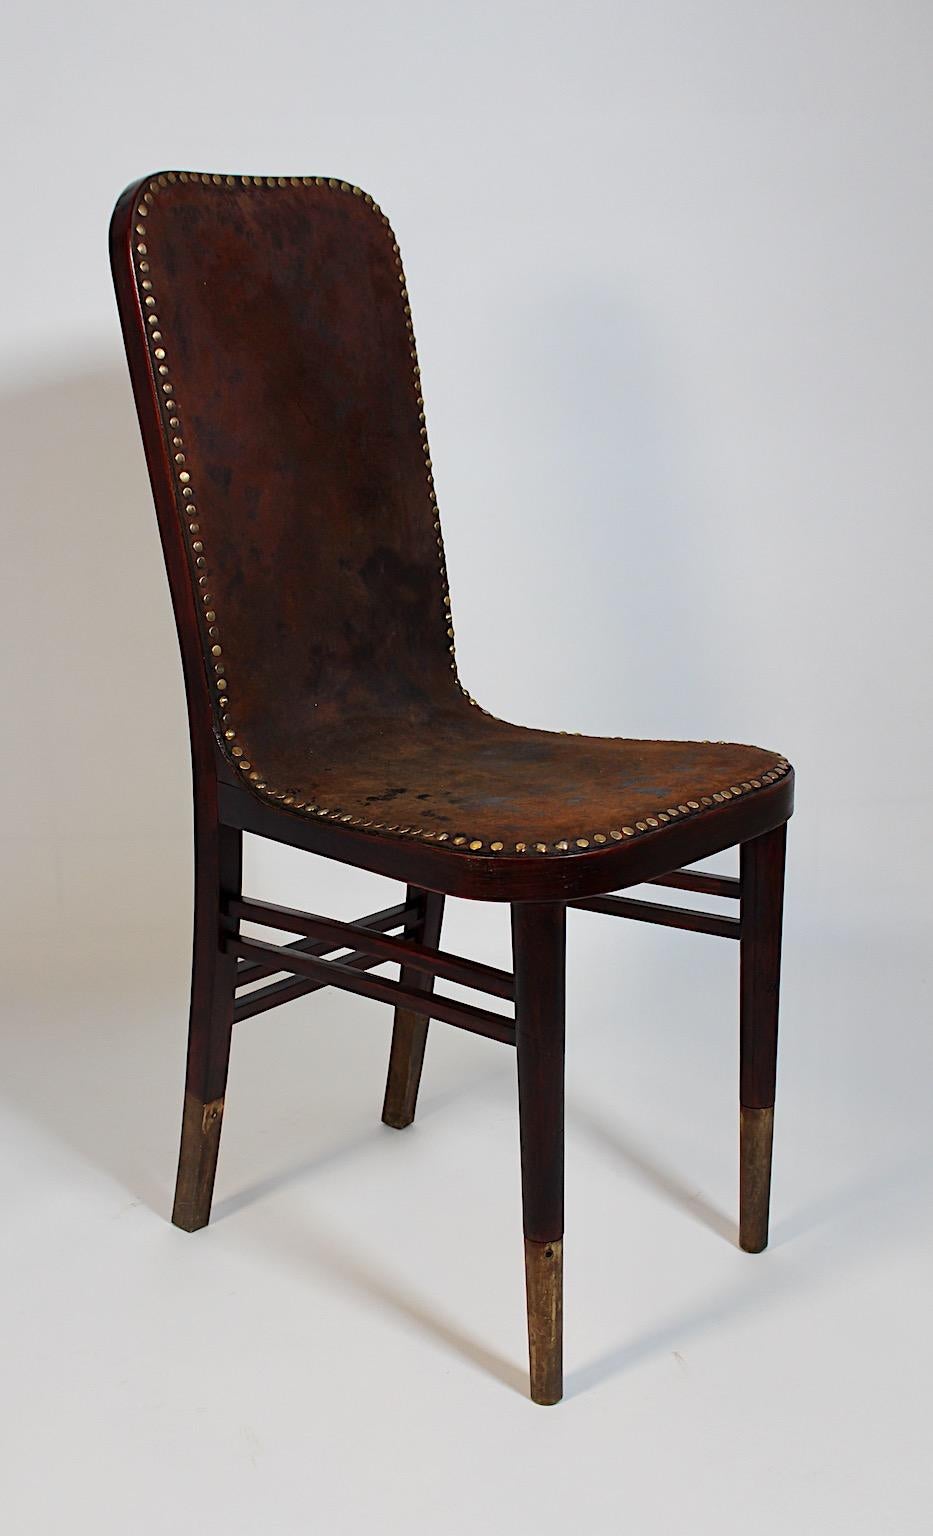 Austrian Jugendstil Side Chair Beech Leather by Joseph Urban Gebrüder Thonet 1903 Vienna For Sale